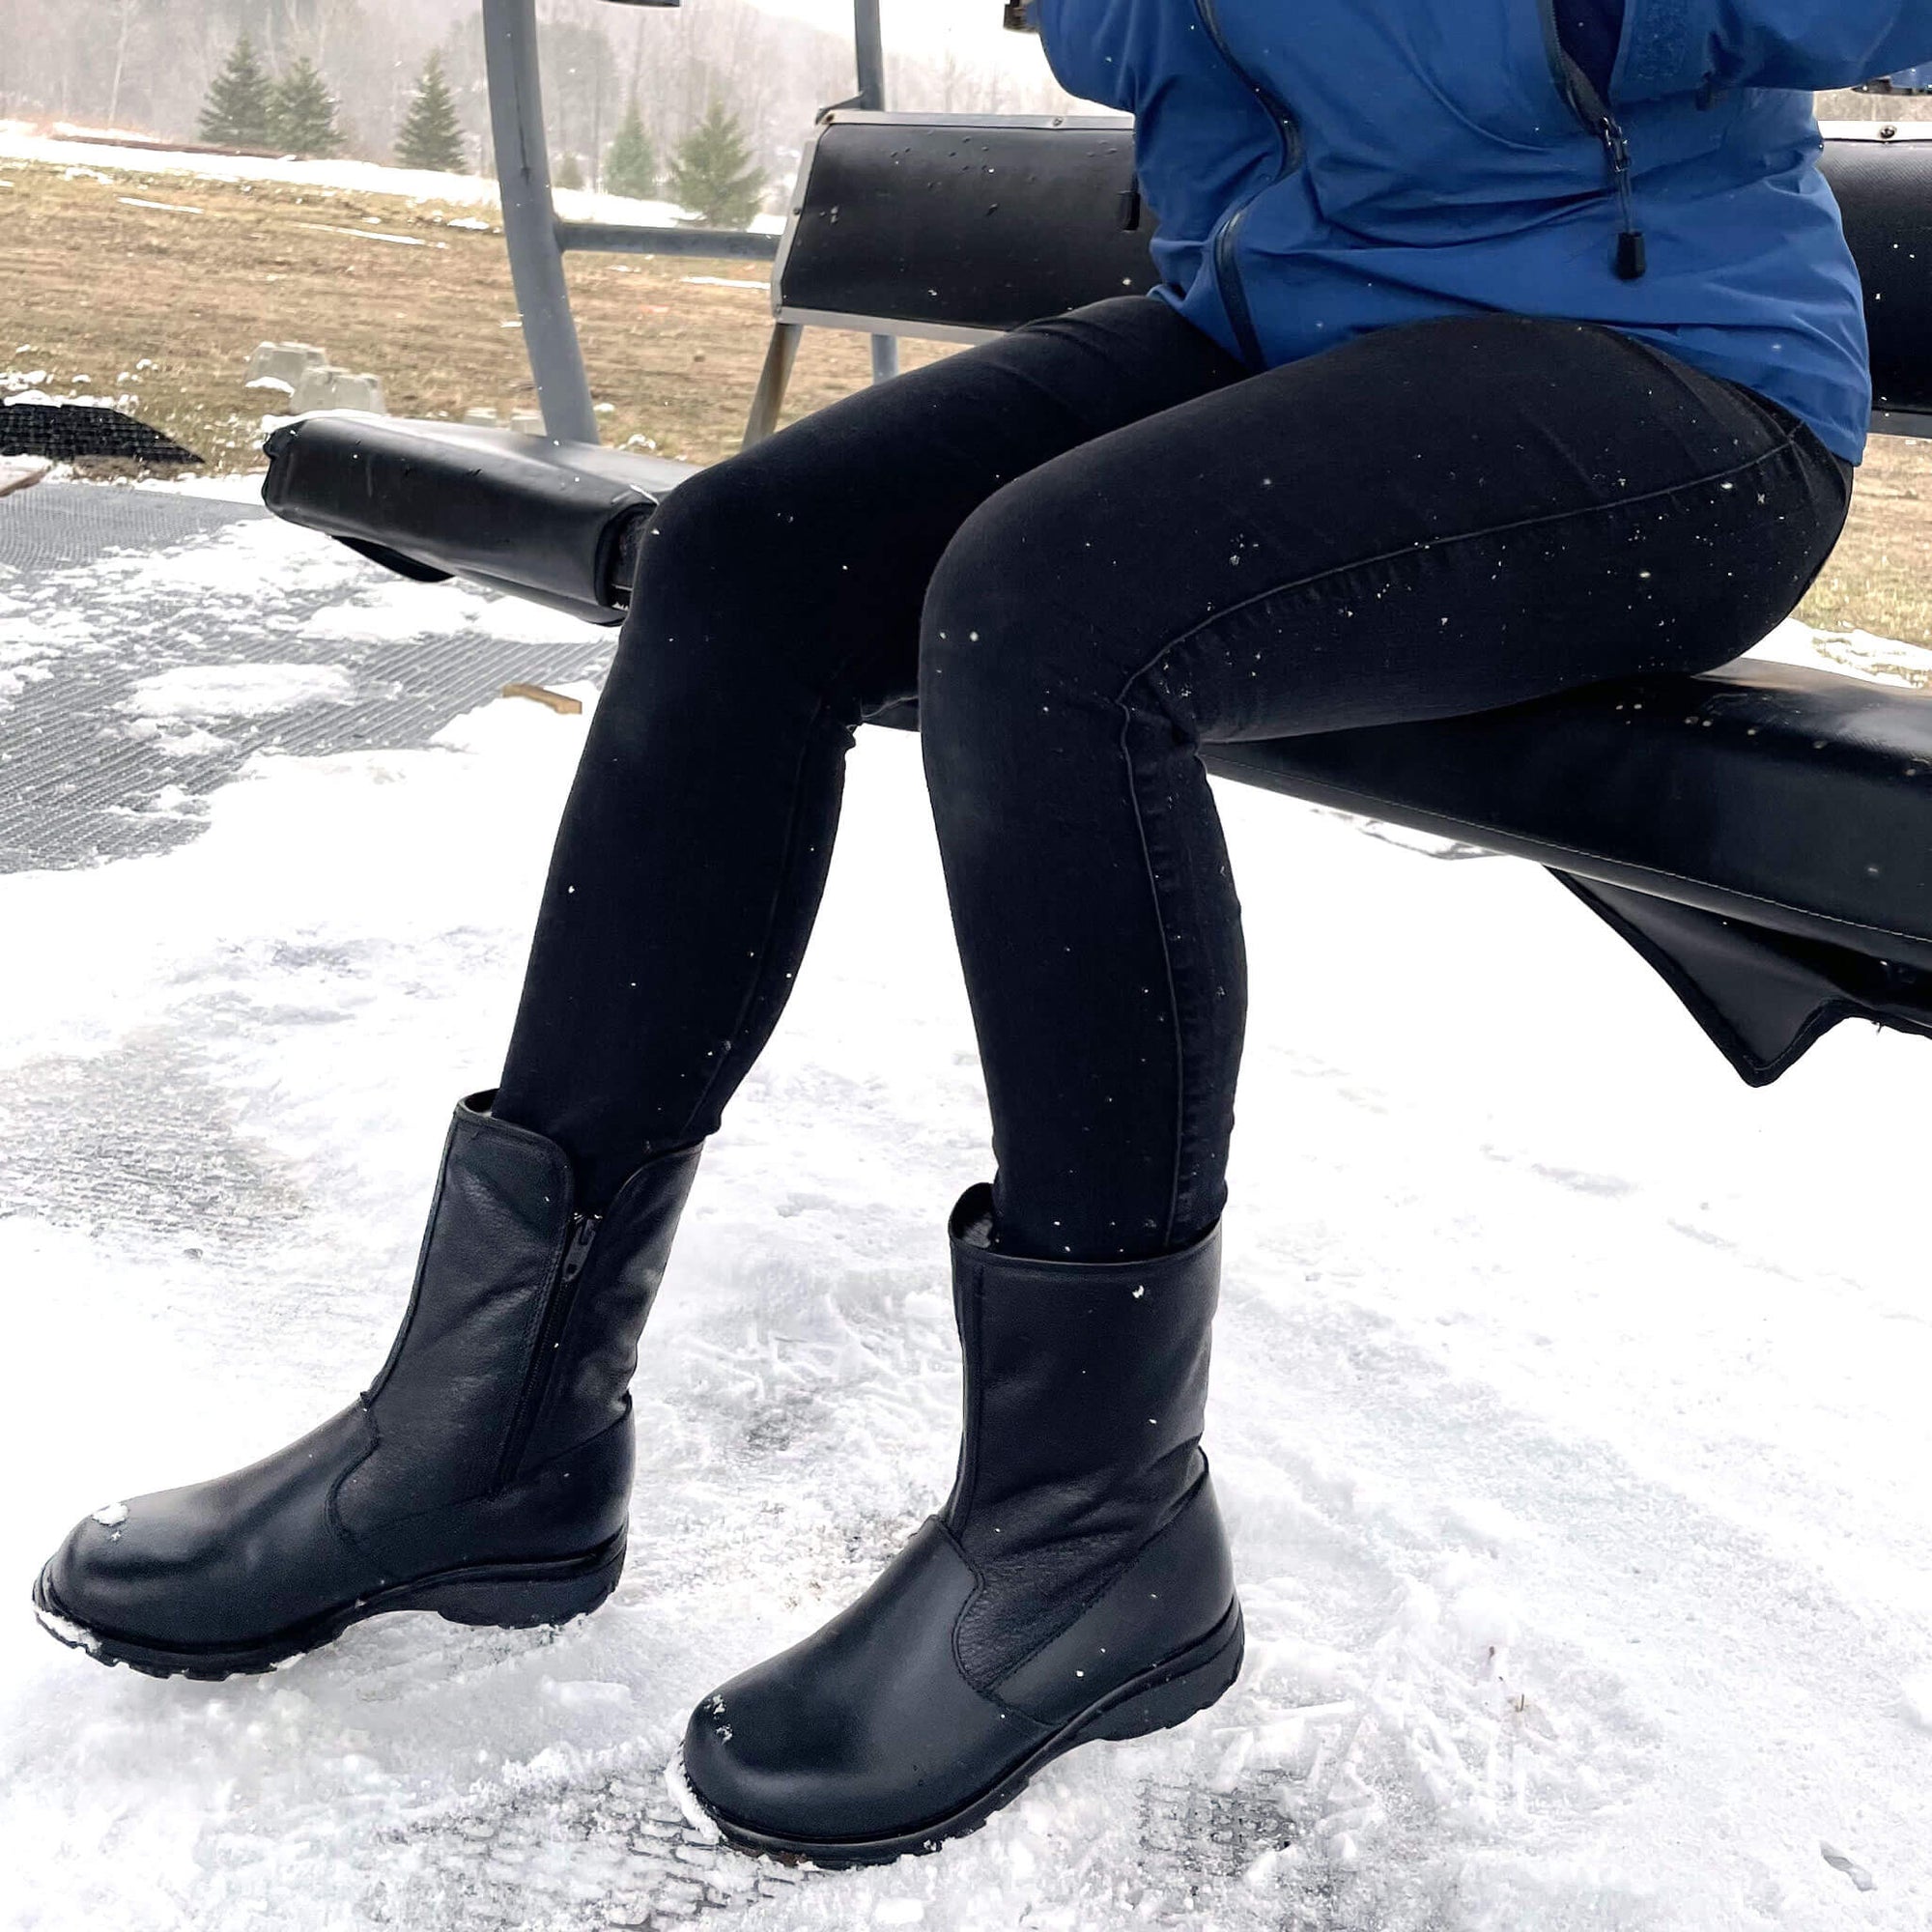 Shield winter boot for women - Black